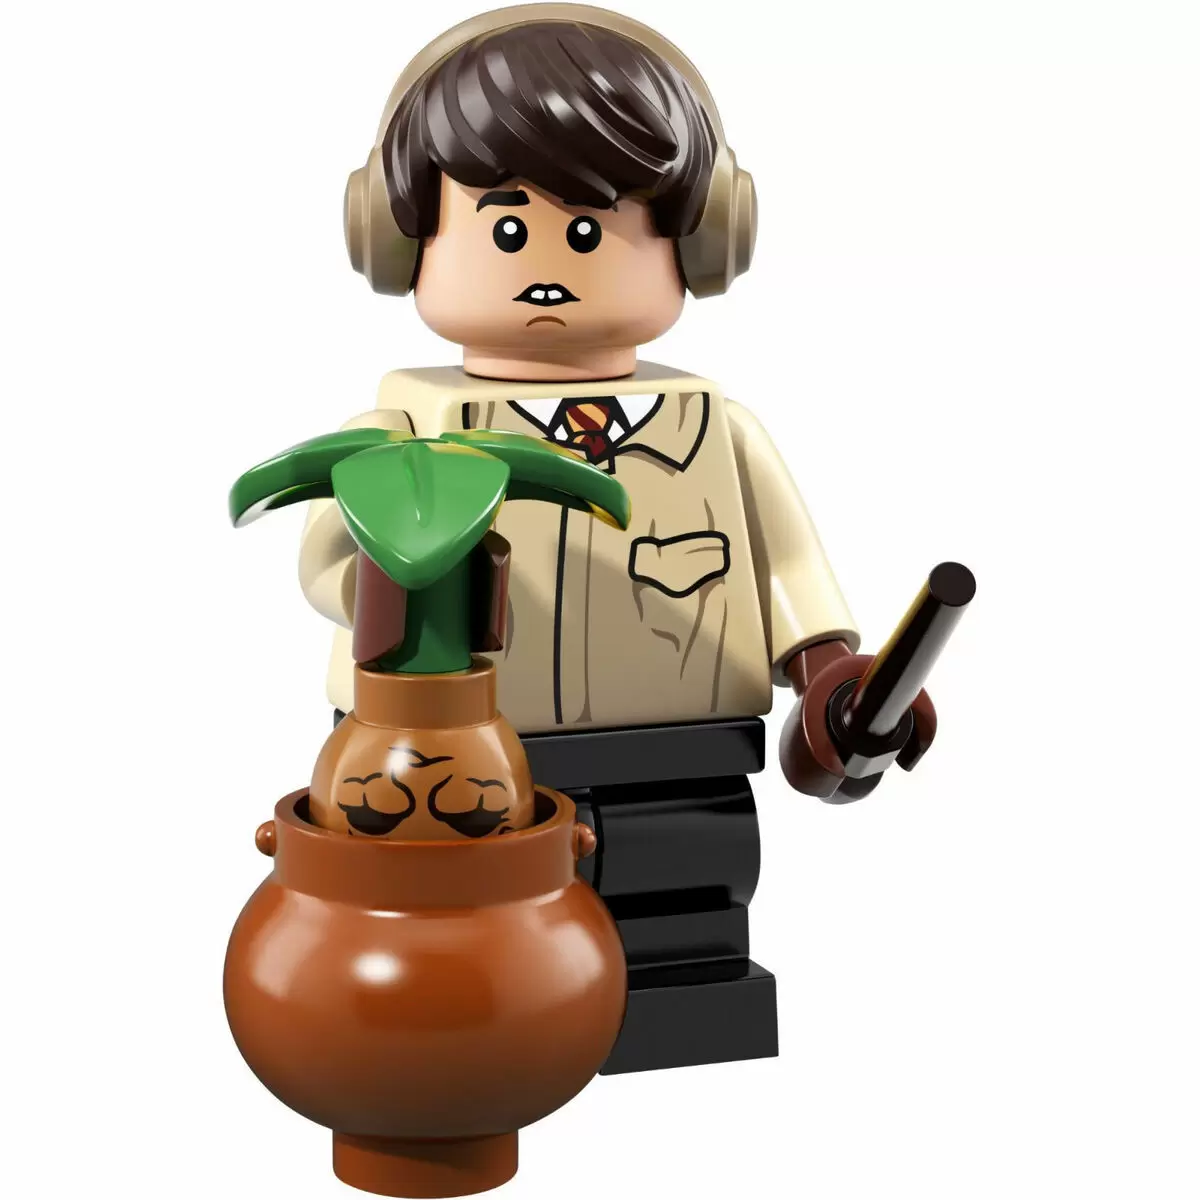 LEGO Minifigures : Wizarding World of Harry Potter - Neville Longbottom